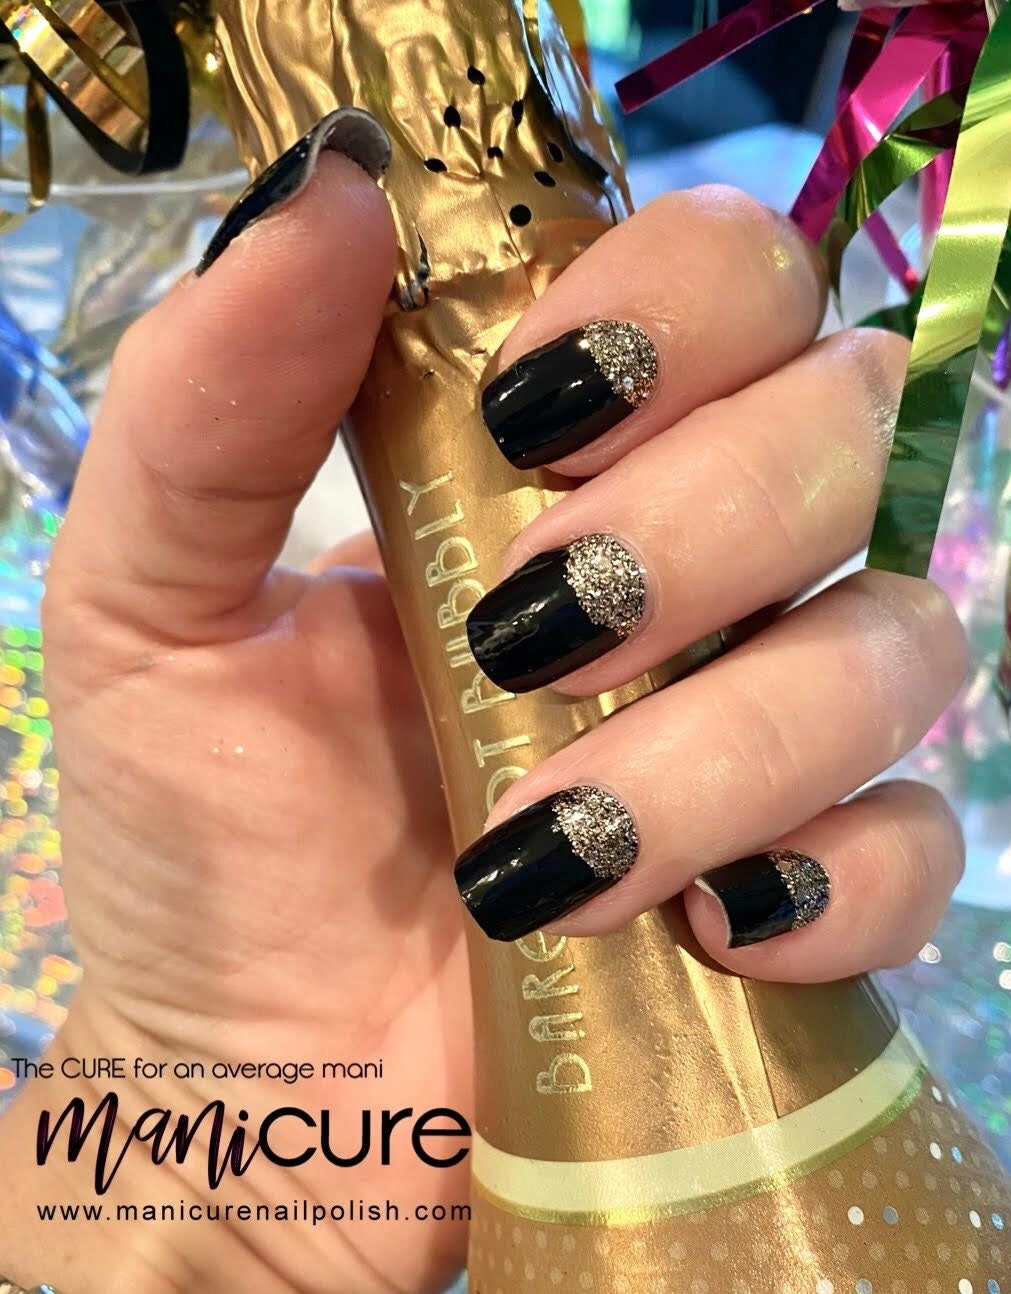 Acrylic nails - black sparkle design 